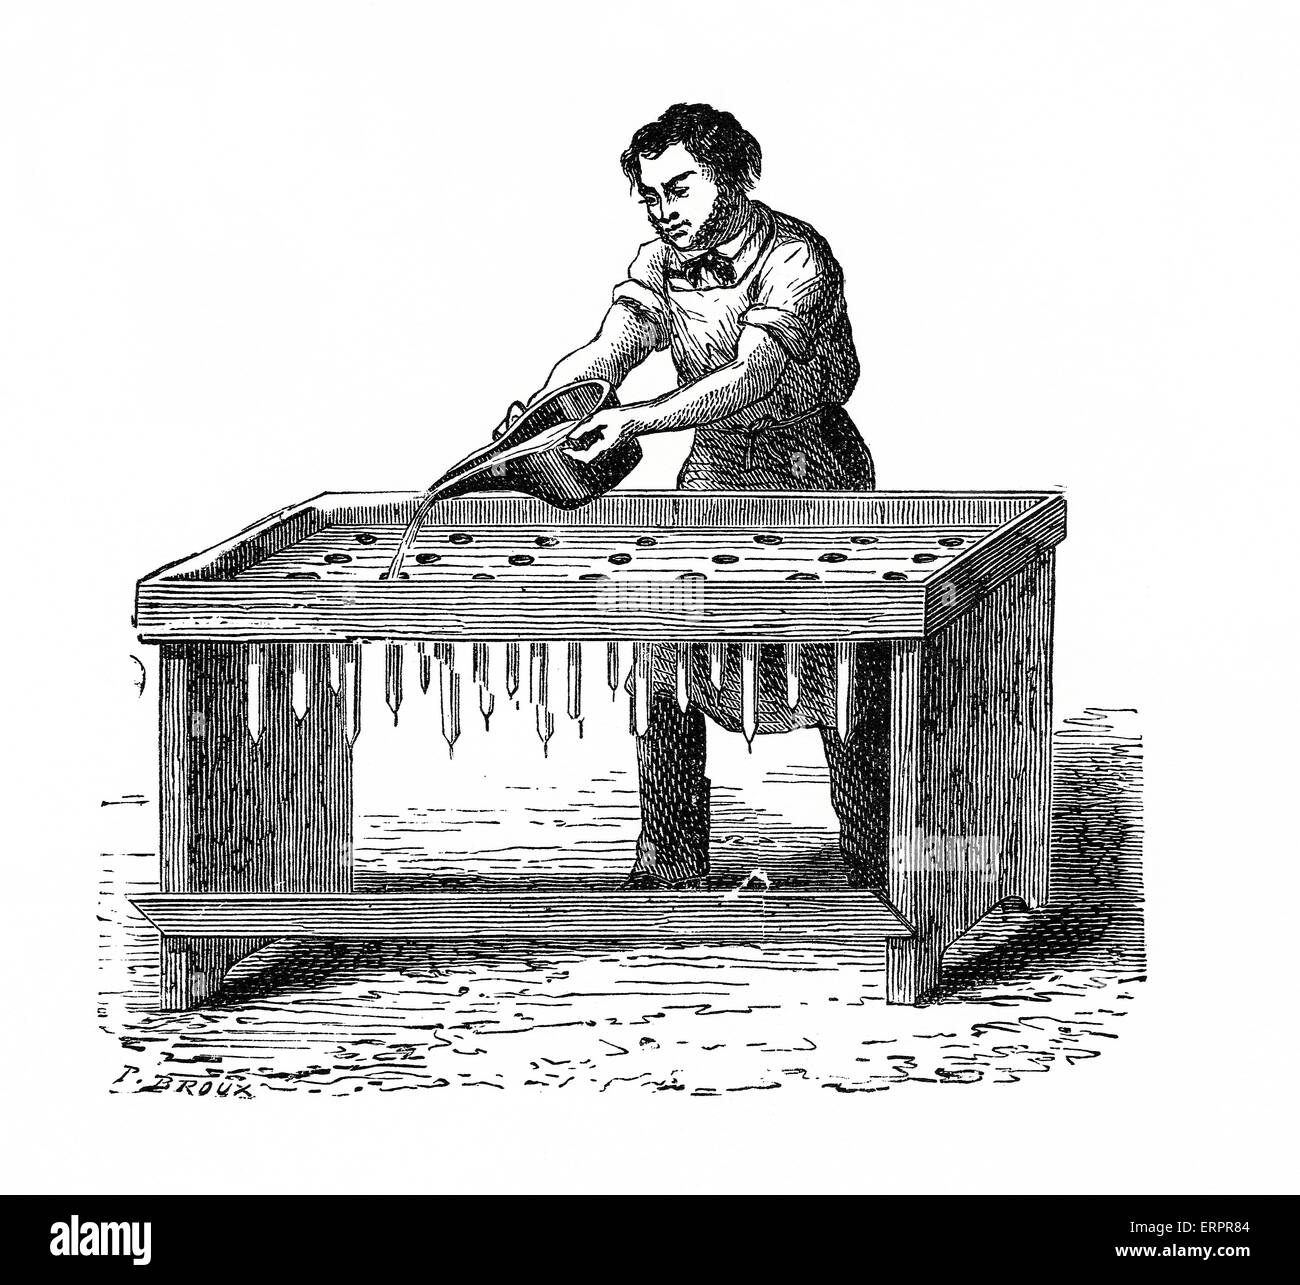 Candle maker, historic illustration. Stock Photo